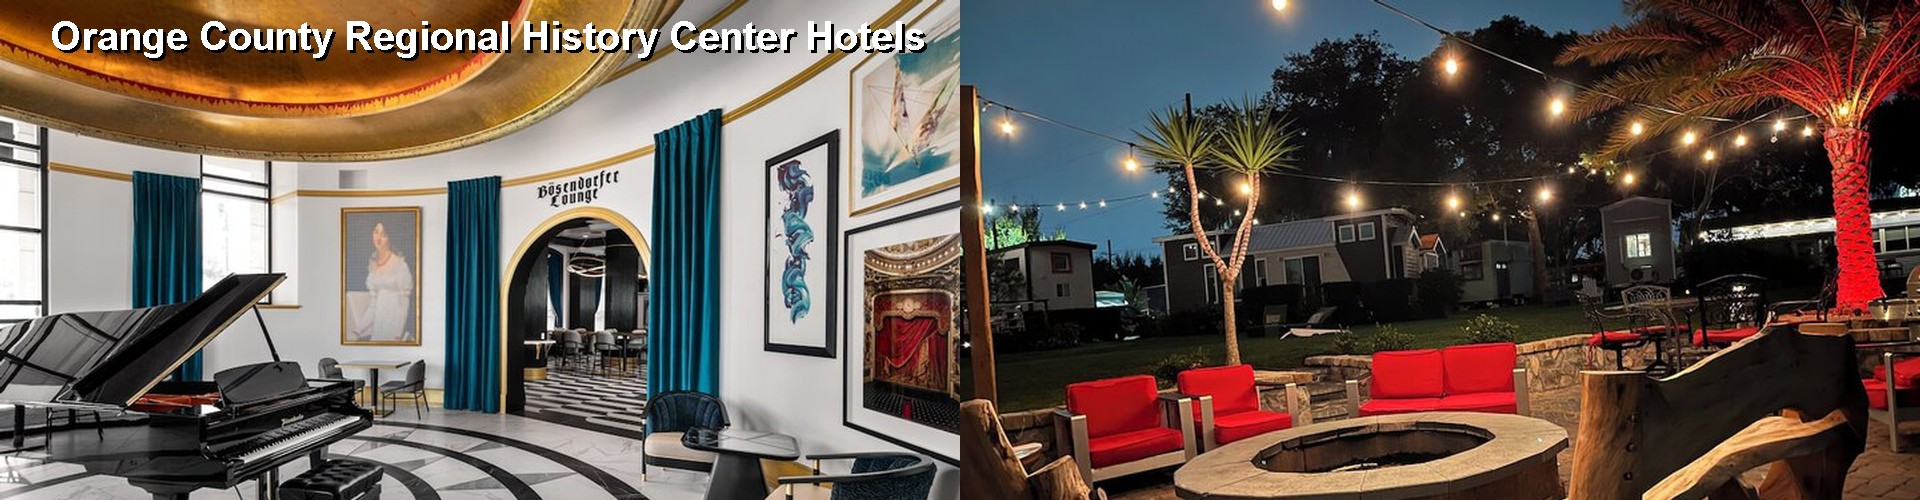 5 Best Hotels near Orange County Regional History Center